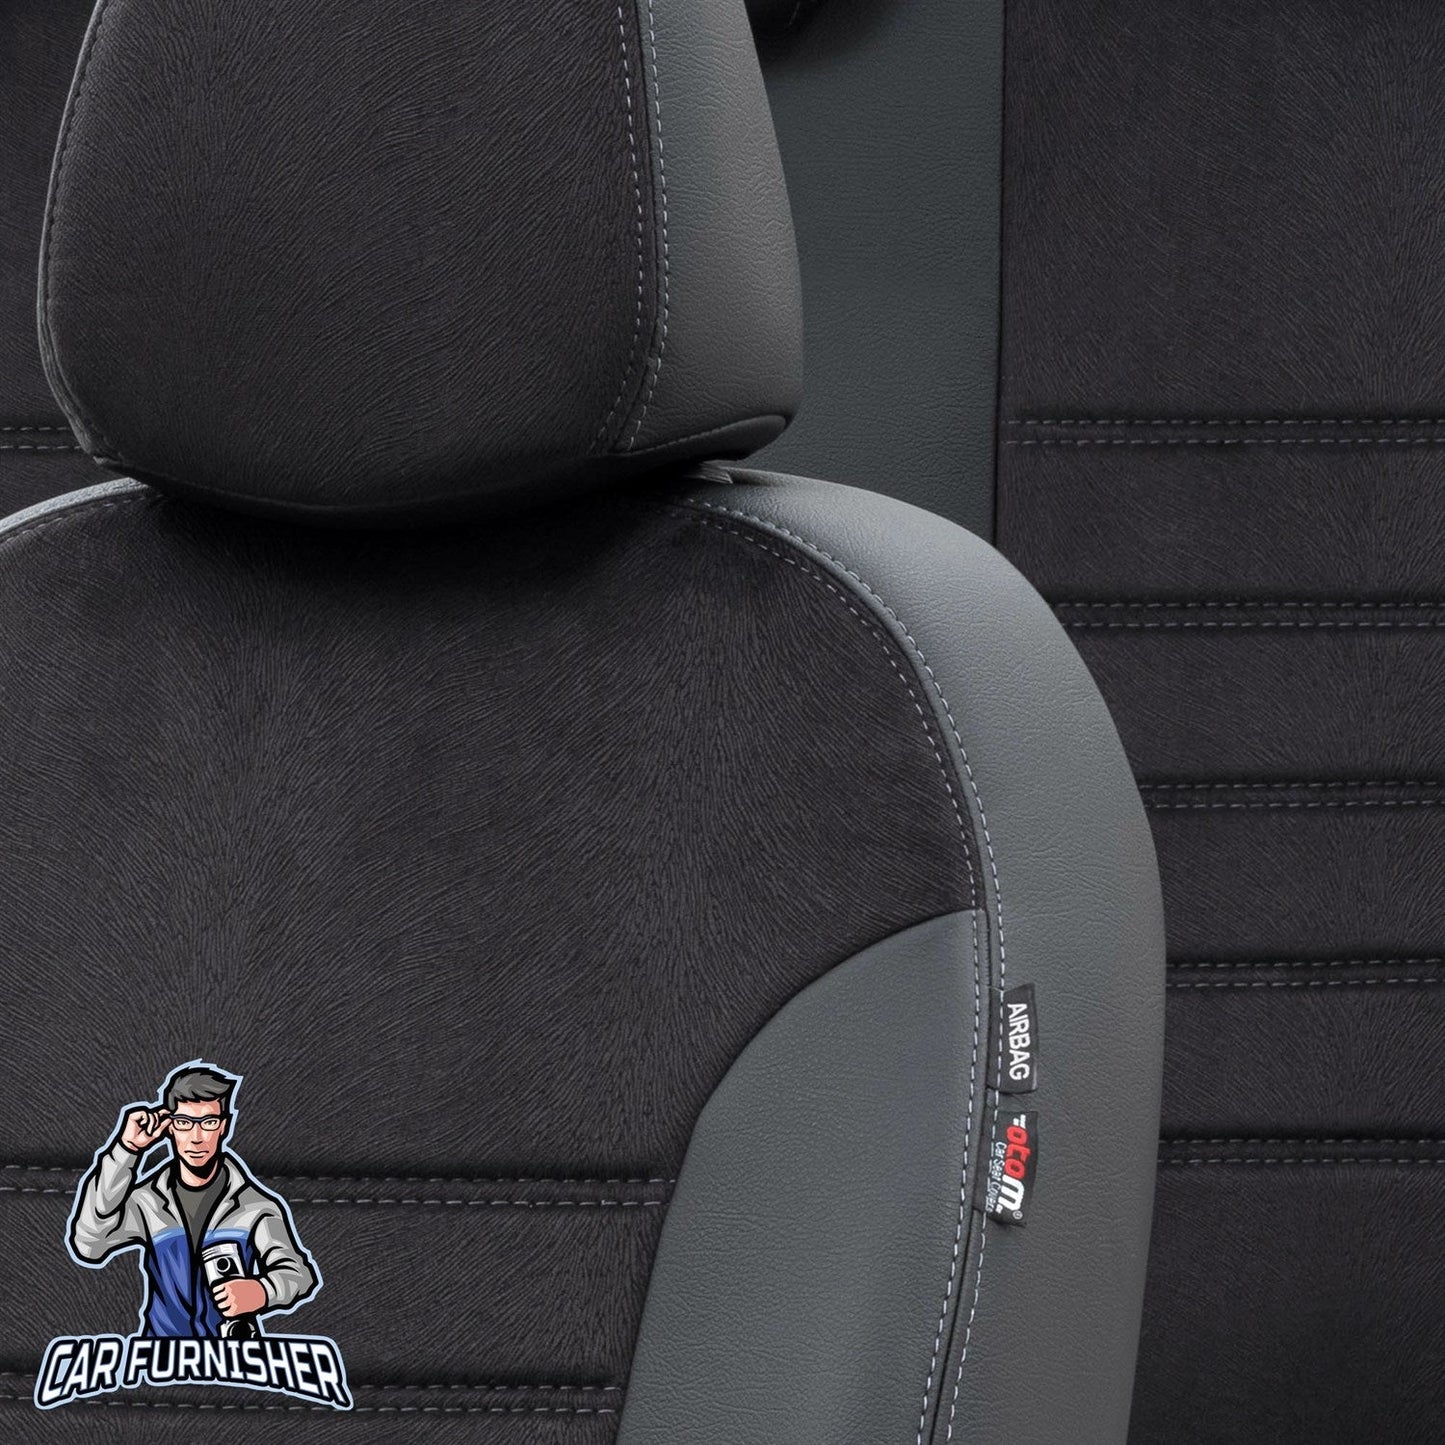 Daihatsu Terios Seat Covers London Foal Feather Design Black Leather & Foal Feather